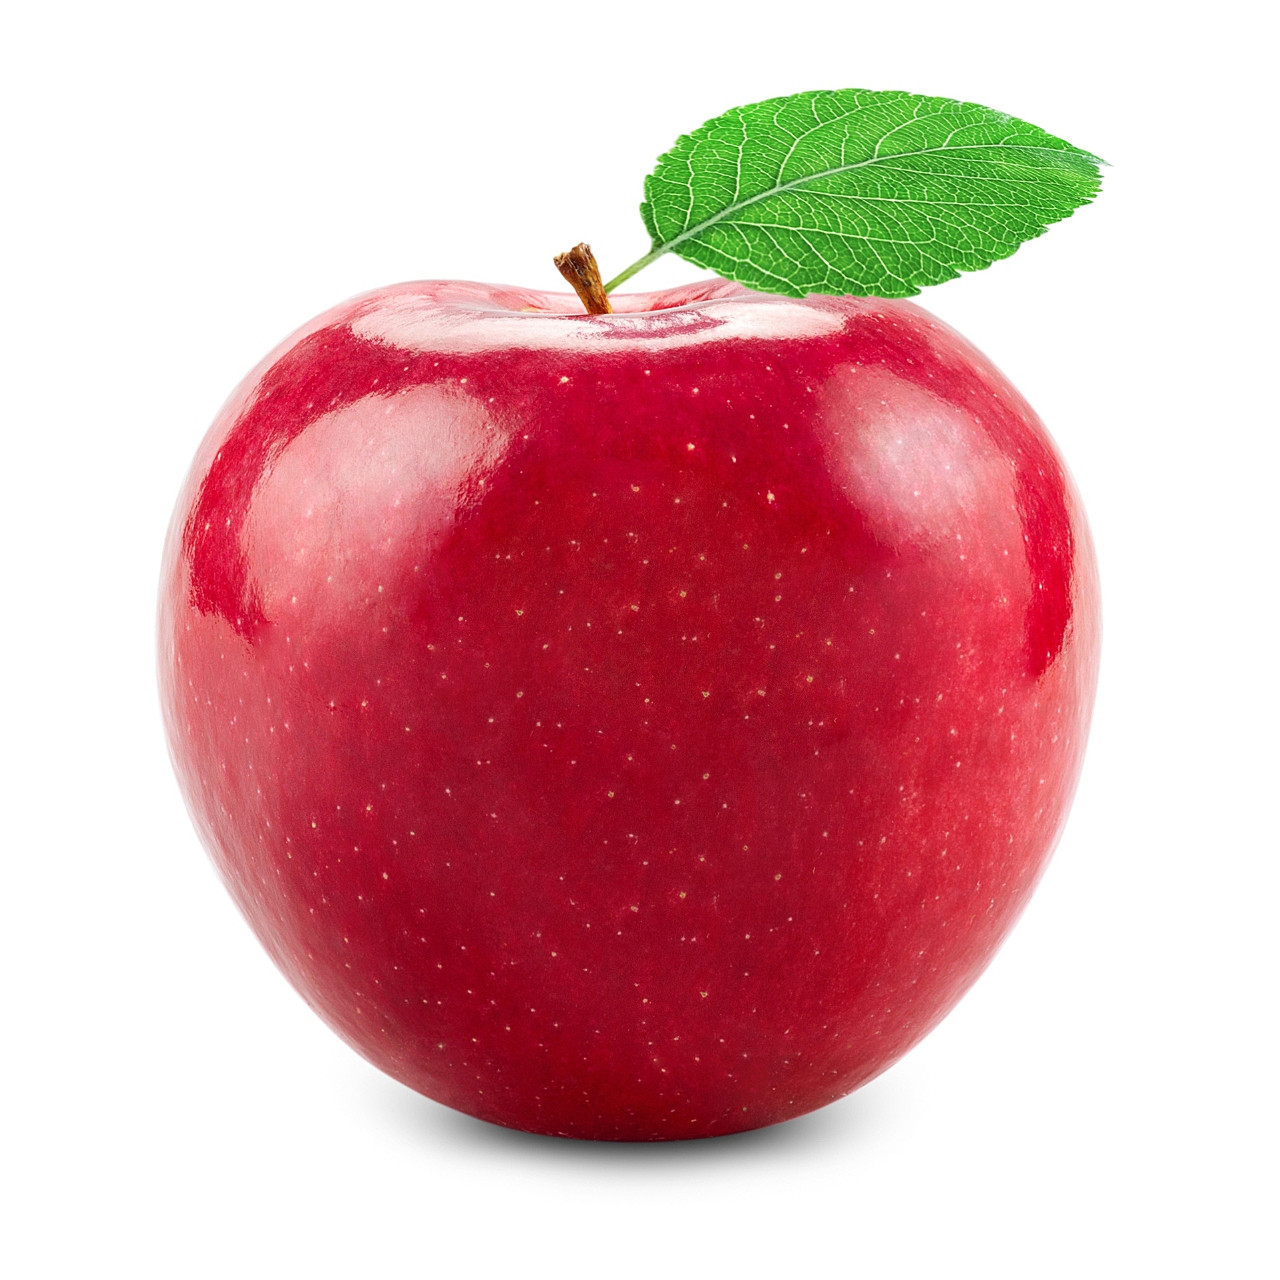 Raw Red Organic Cosmic Crisp Apples Stock Photo - Image of apples